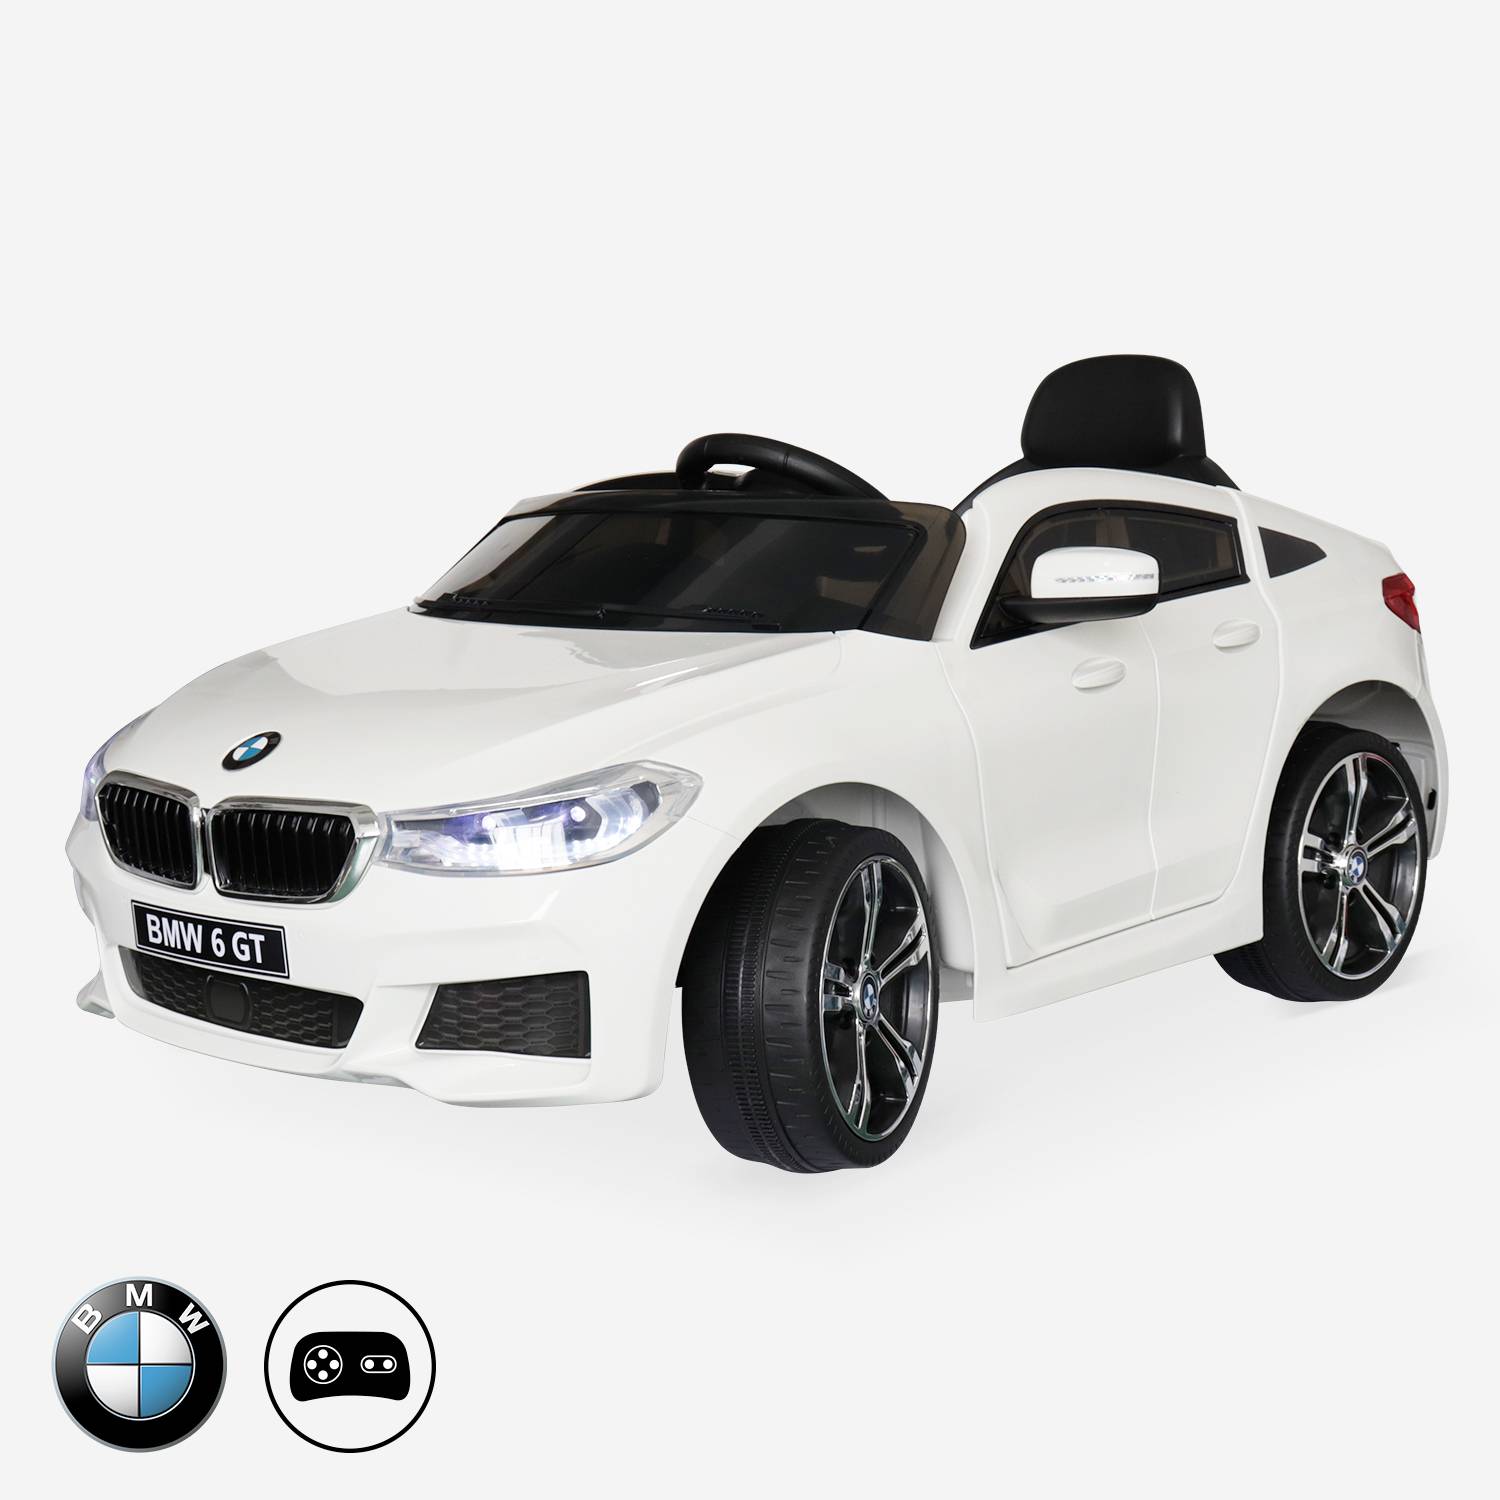 BMW Serie 6GT